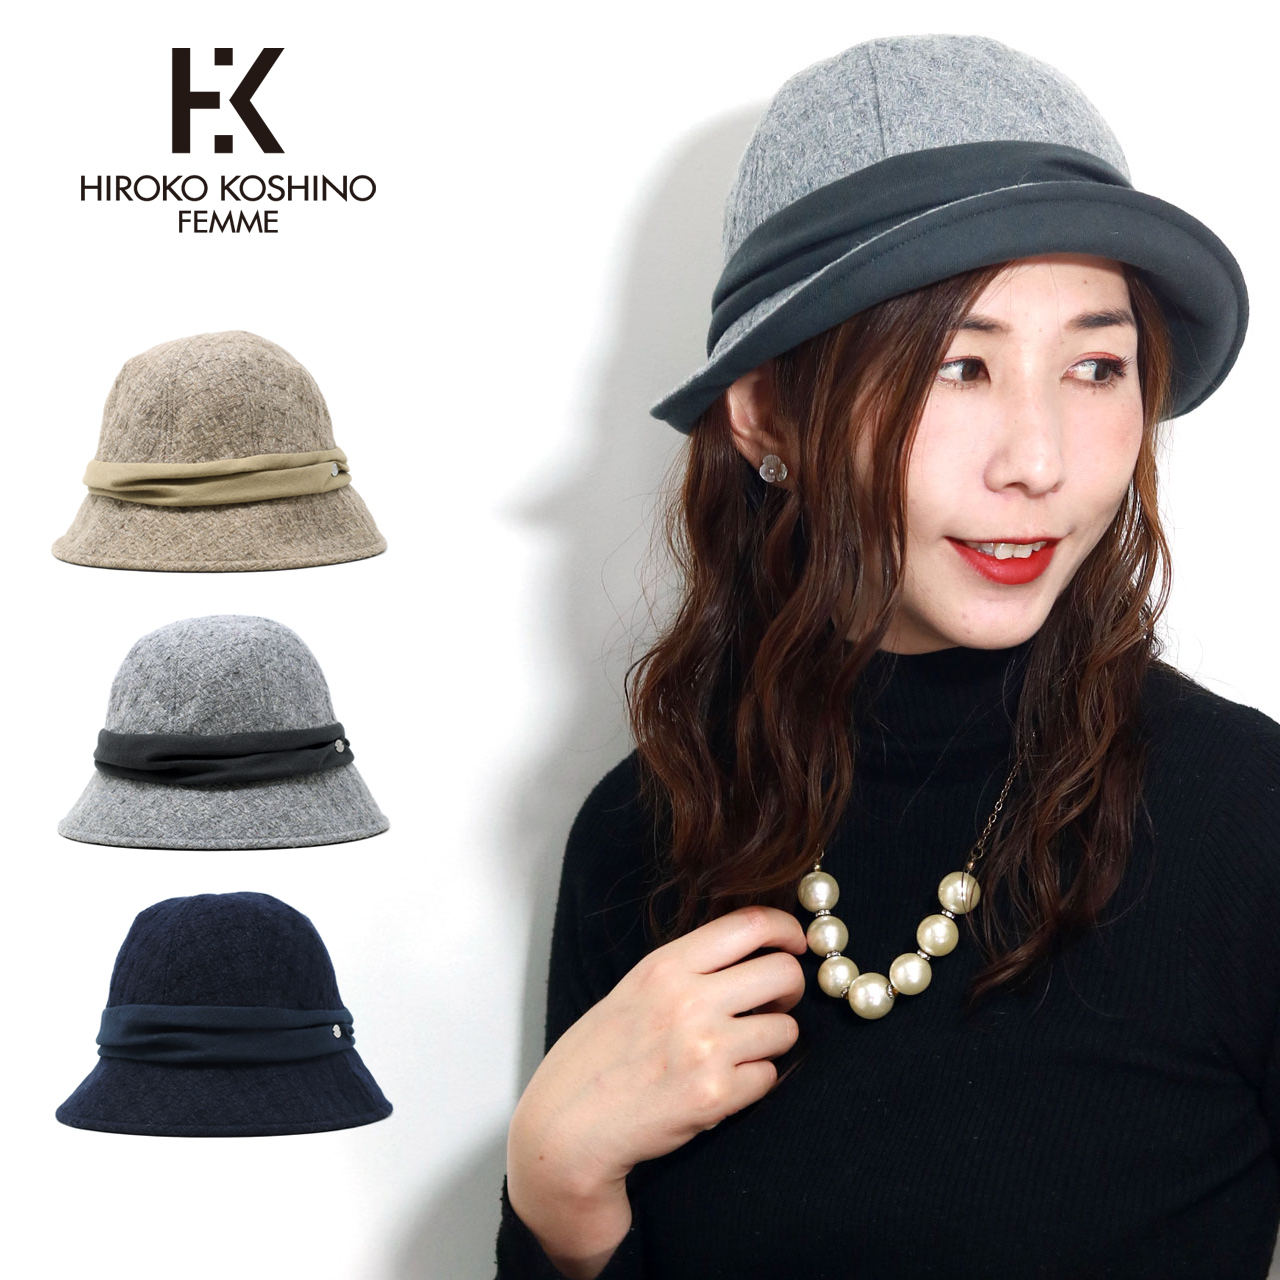 HIROKO KOSHINO 婦人ファッションブランド ミセス コシノヒロコ レディース帽子 クロッシェ フランネル ワンポイント 婦人 紫外線対策  ベージュ グレー ネイビー